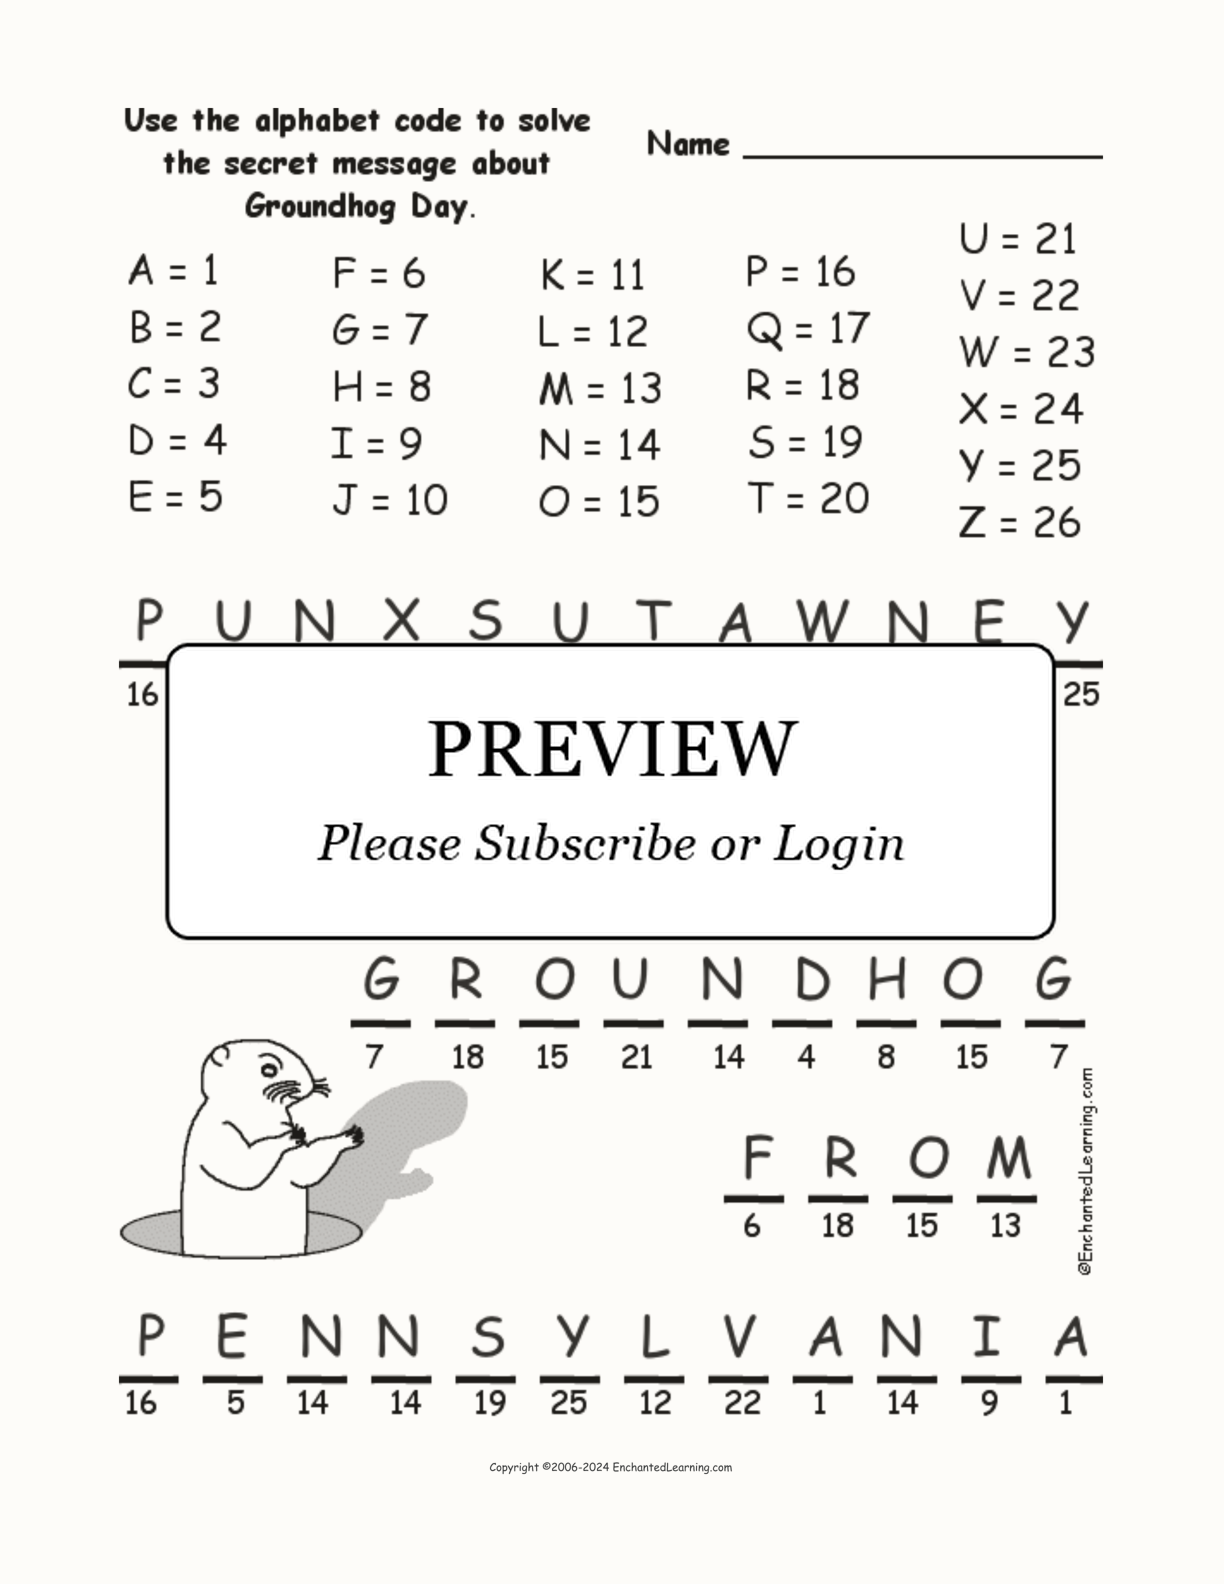 Groundhog Day Alphabet Code interactive worksheet page 2